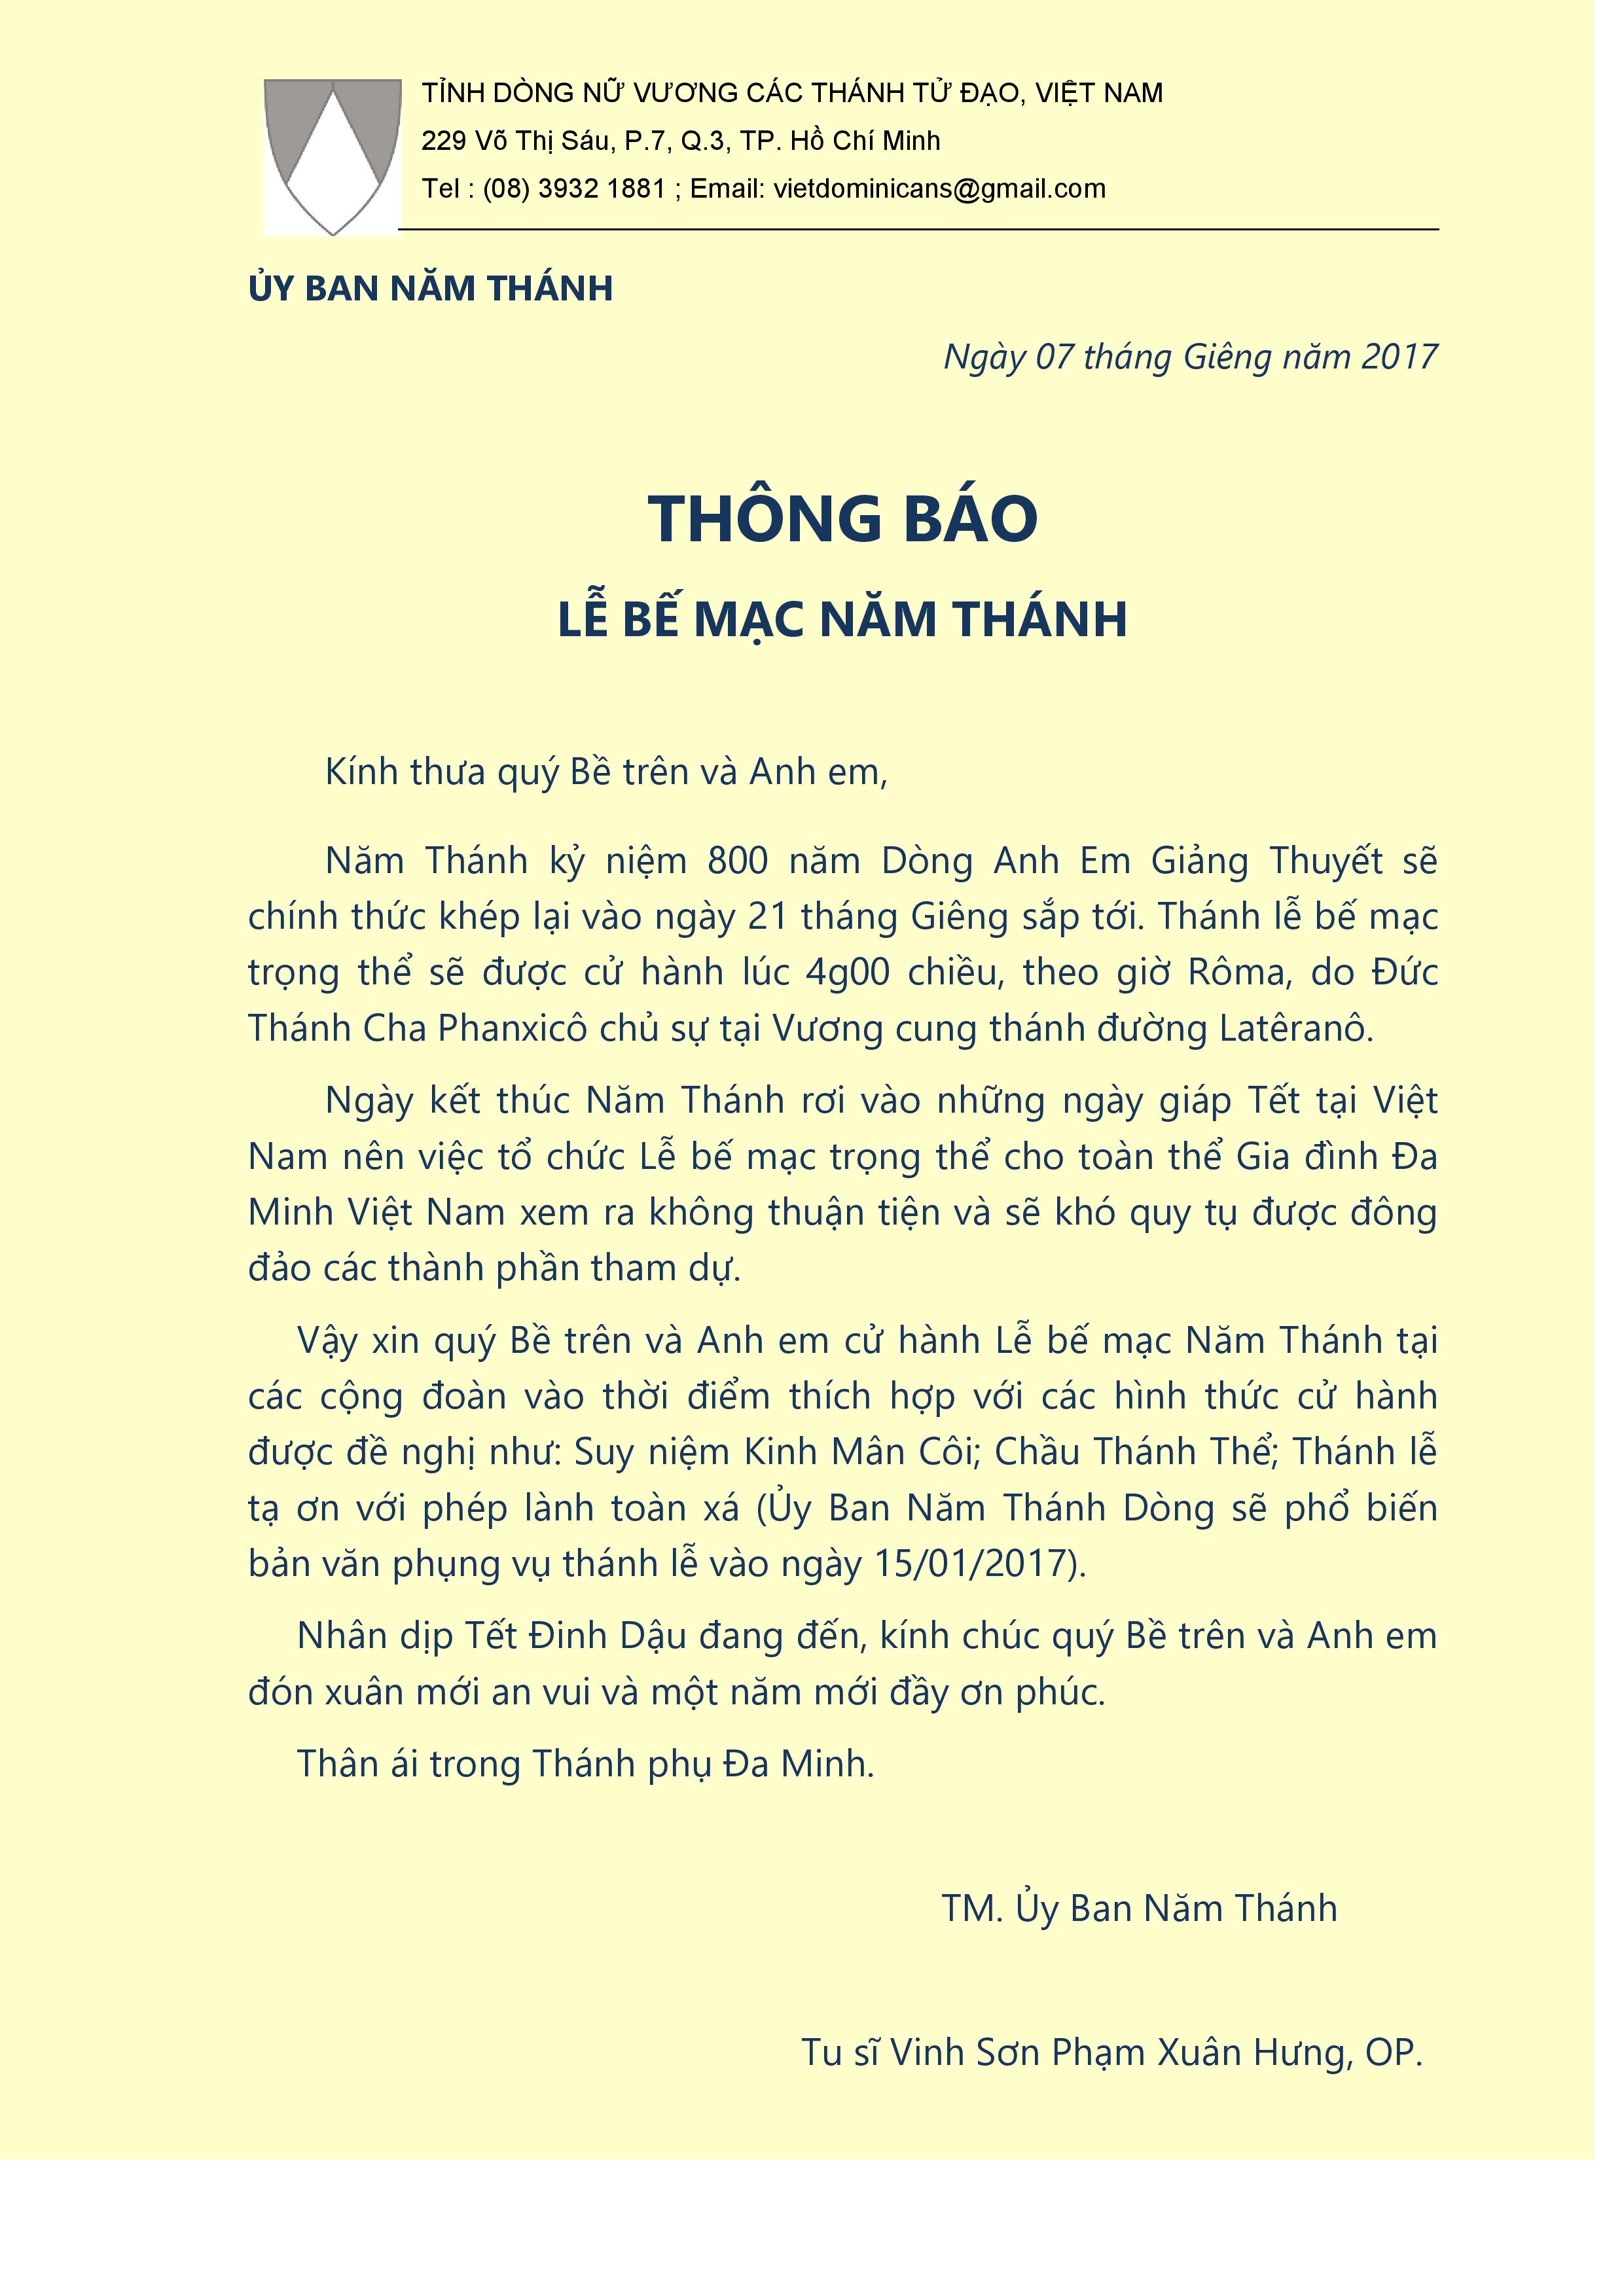 Le Van Thanh Bao Minh Insurance